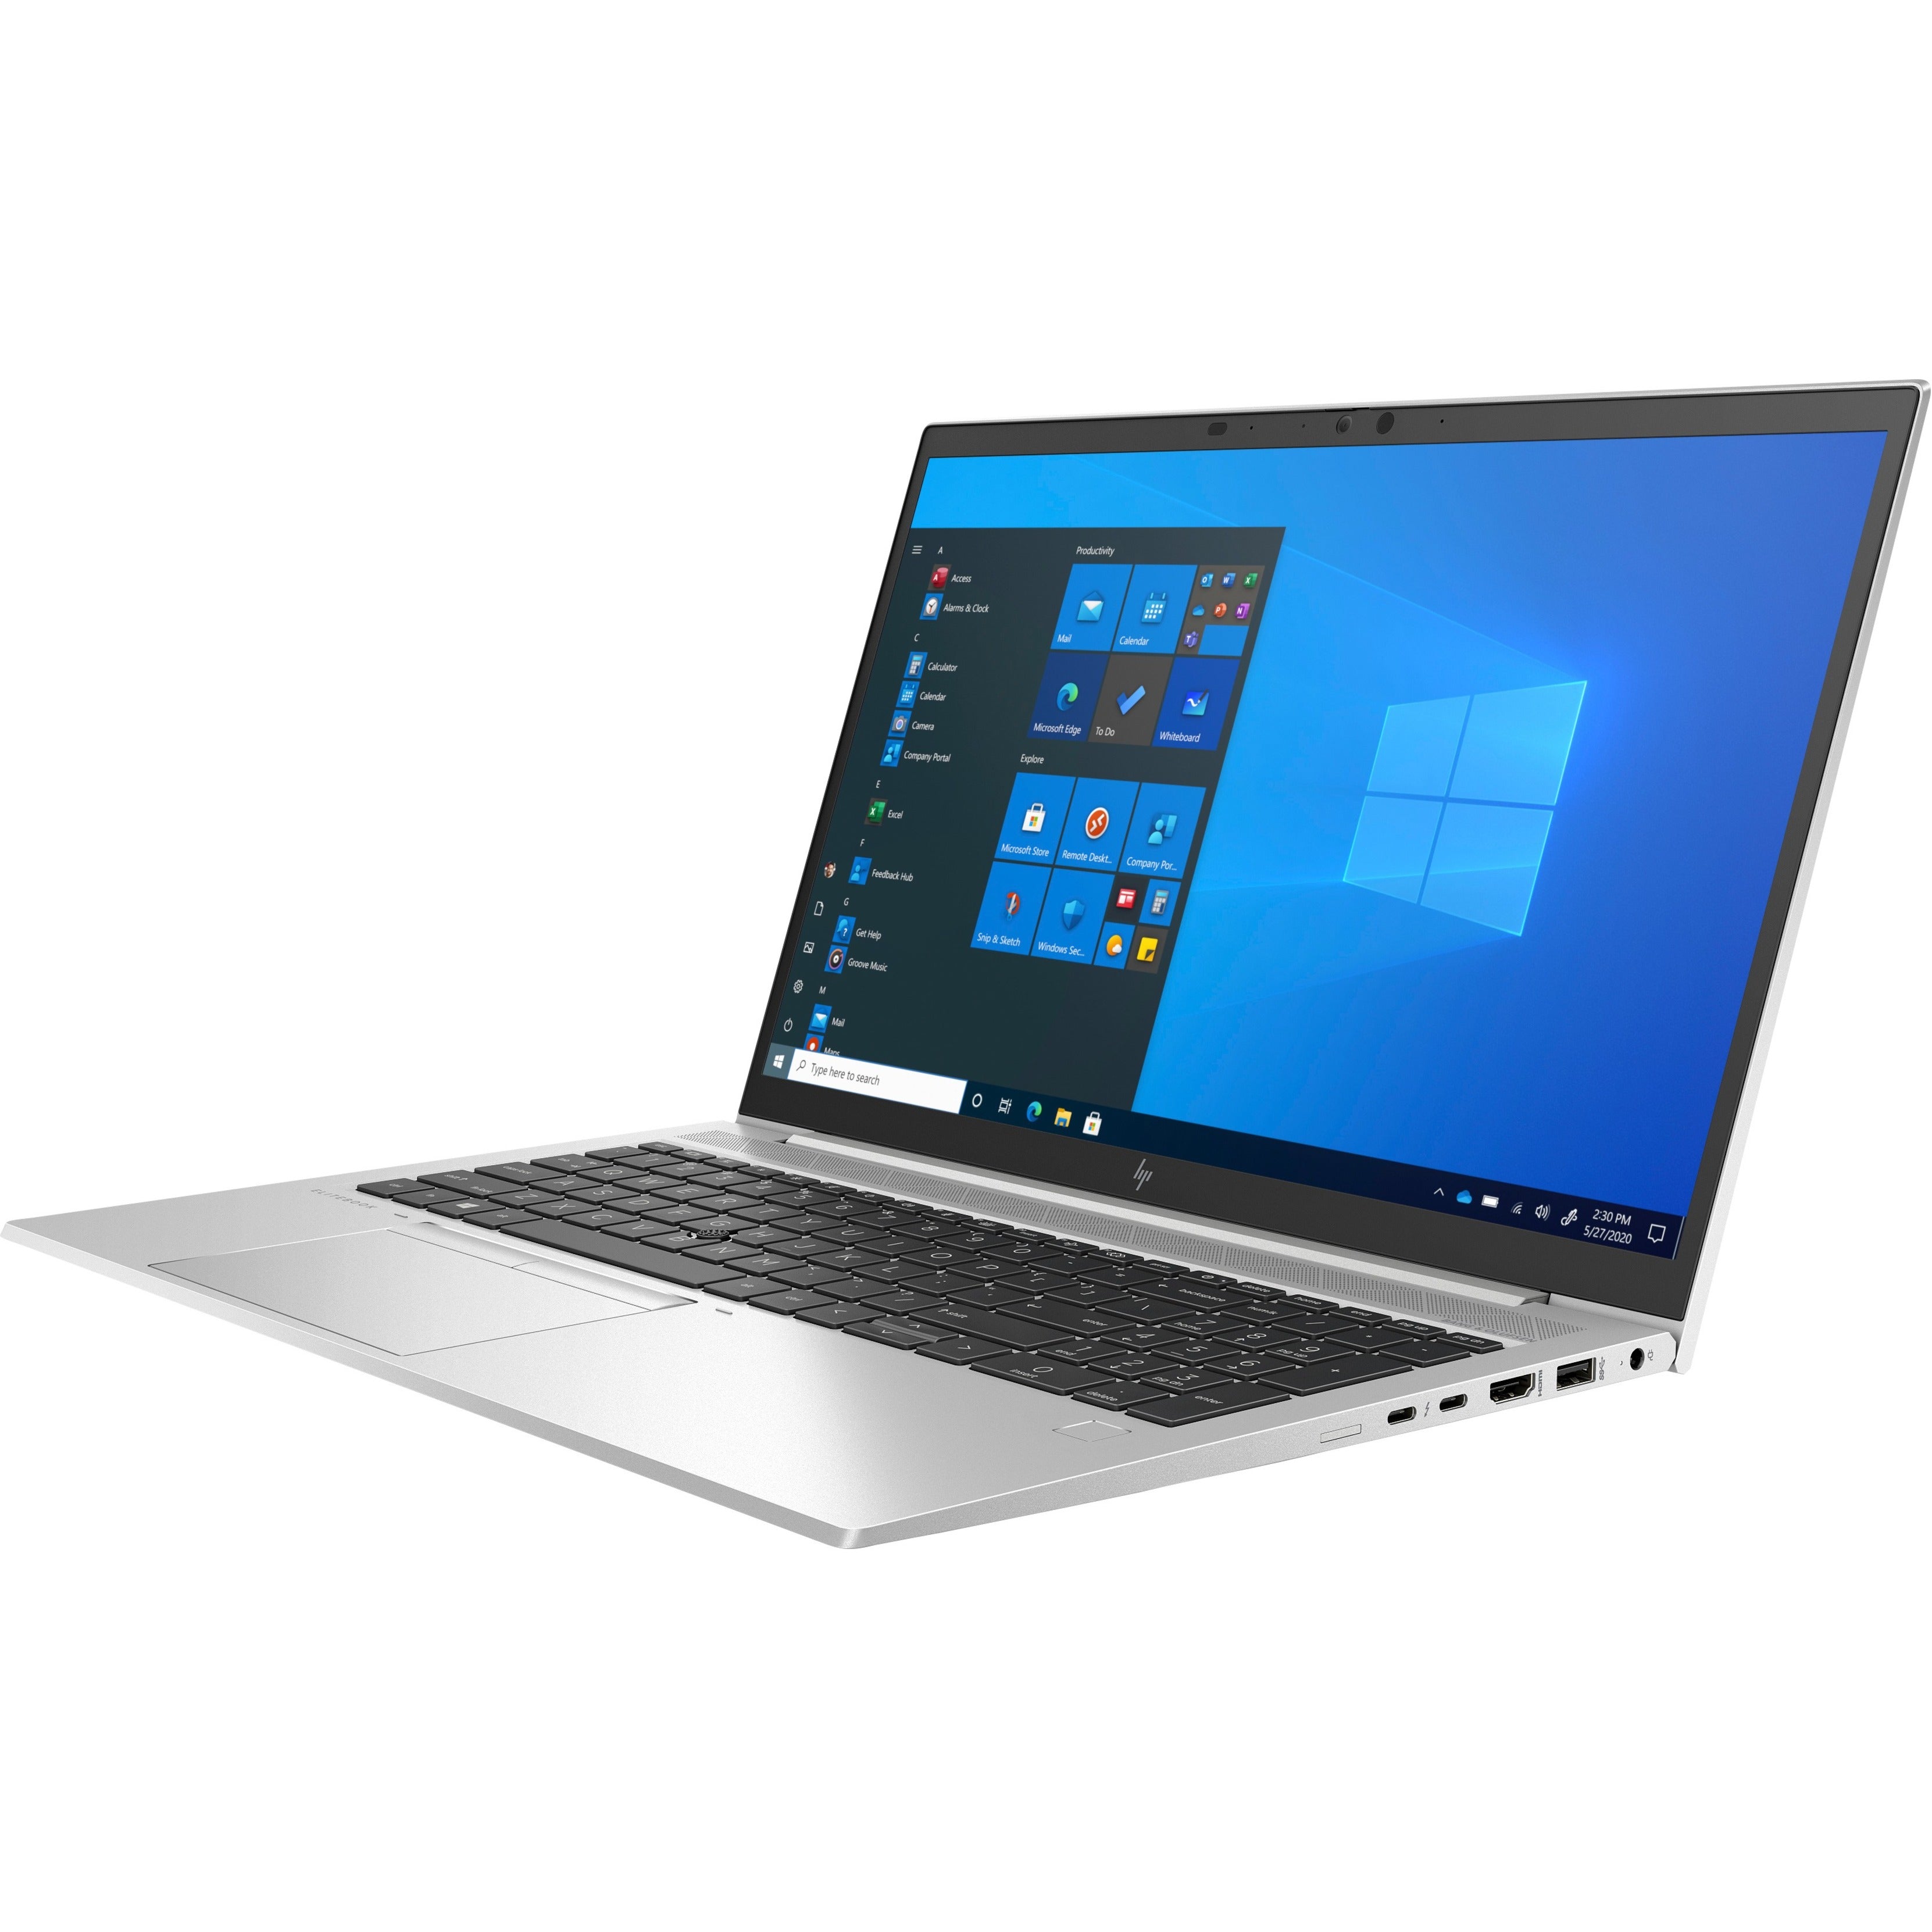 HP EliteBook 850 G8 Notebook PC, Intel i7-1165G7, 16GB RAM, 256GB SSD, 15.6 FHD, Windows 10 Pro